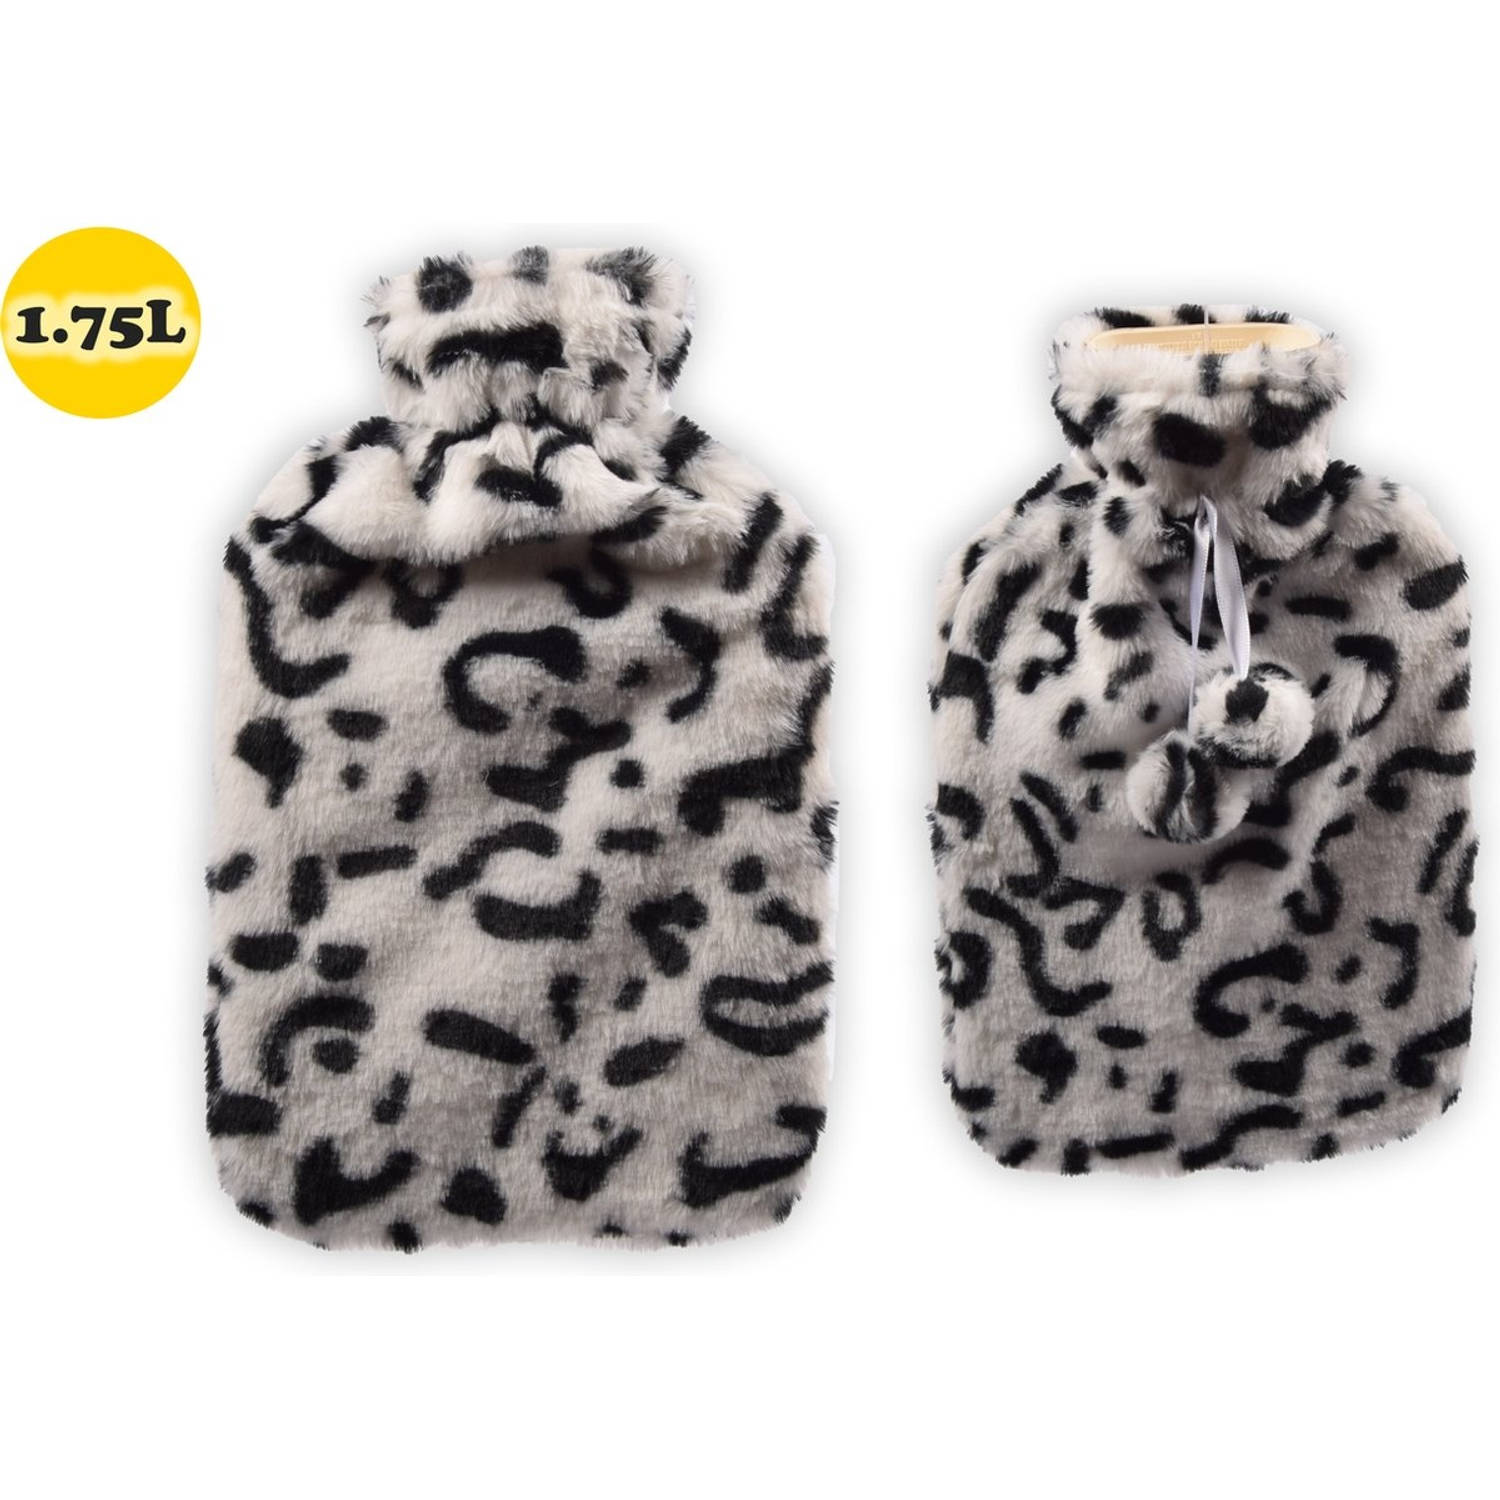 Warme 1.78l Kruik met Schattige Knuffelhoes - Perfect voor Baby's, 55% Rubber - cheetah print